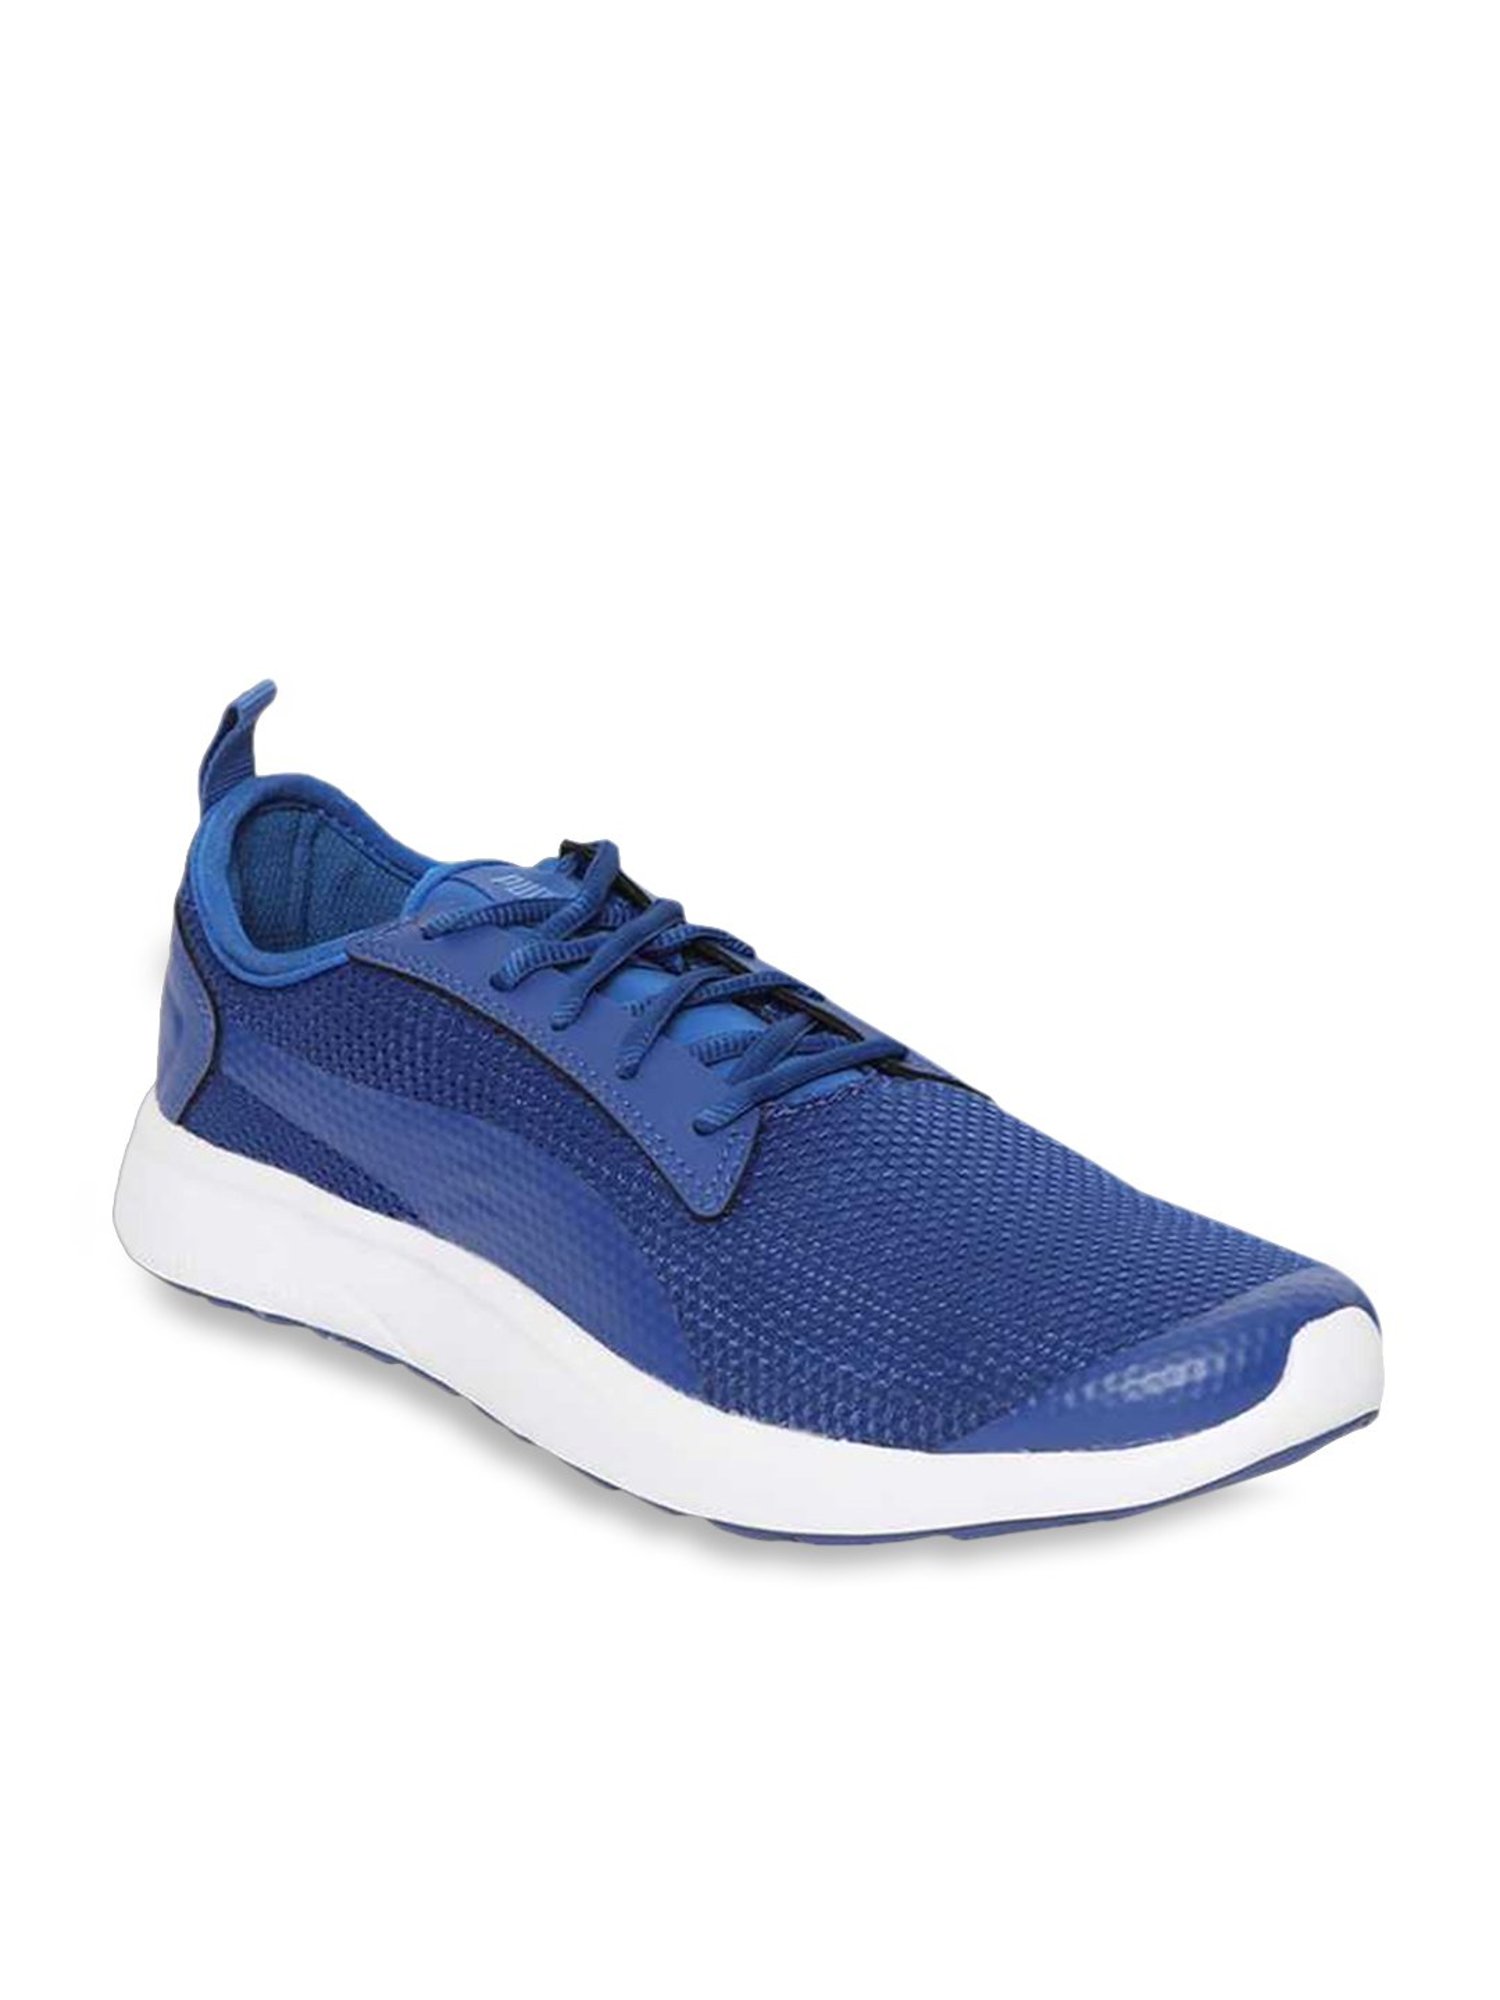 Buy Puma Breakout V2 IDP Blue Sneakers 